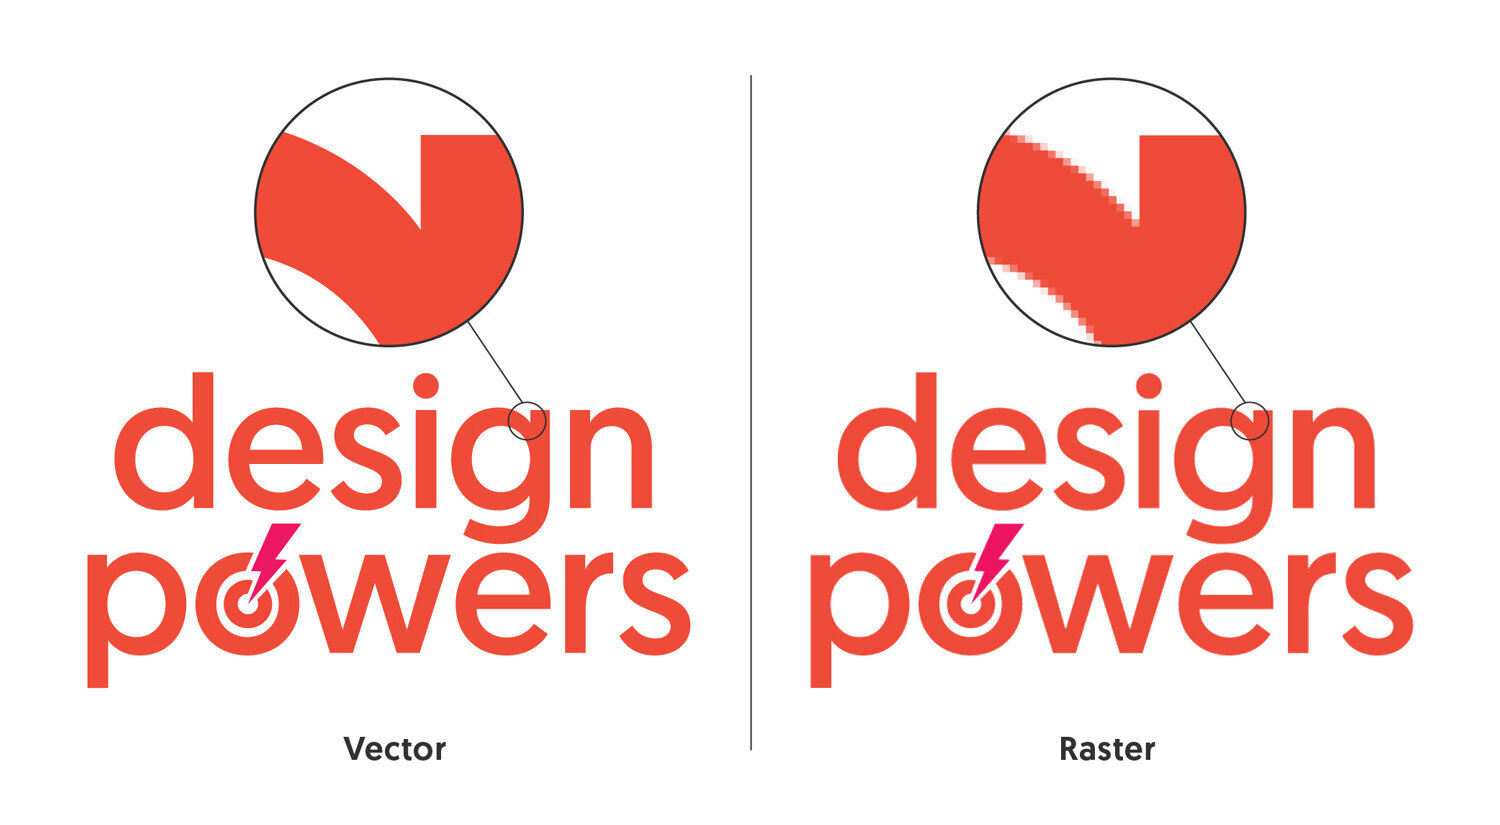 Vector graphic vs Raster graphic